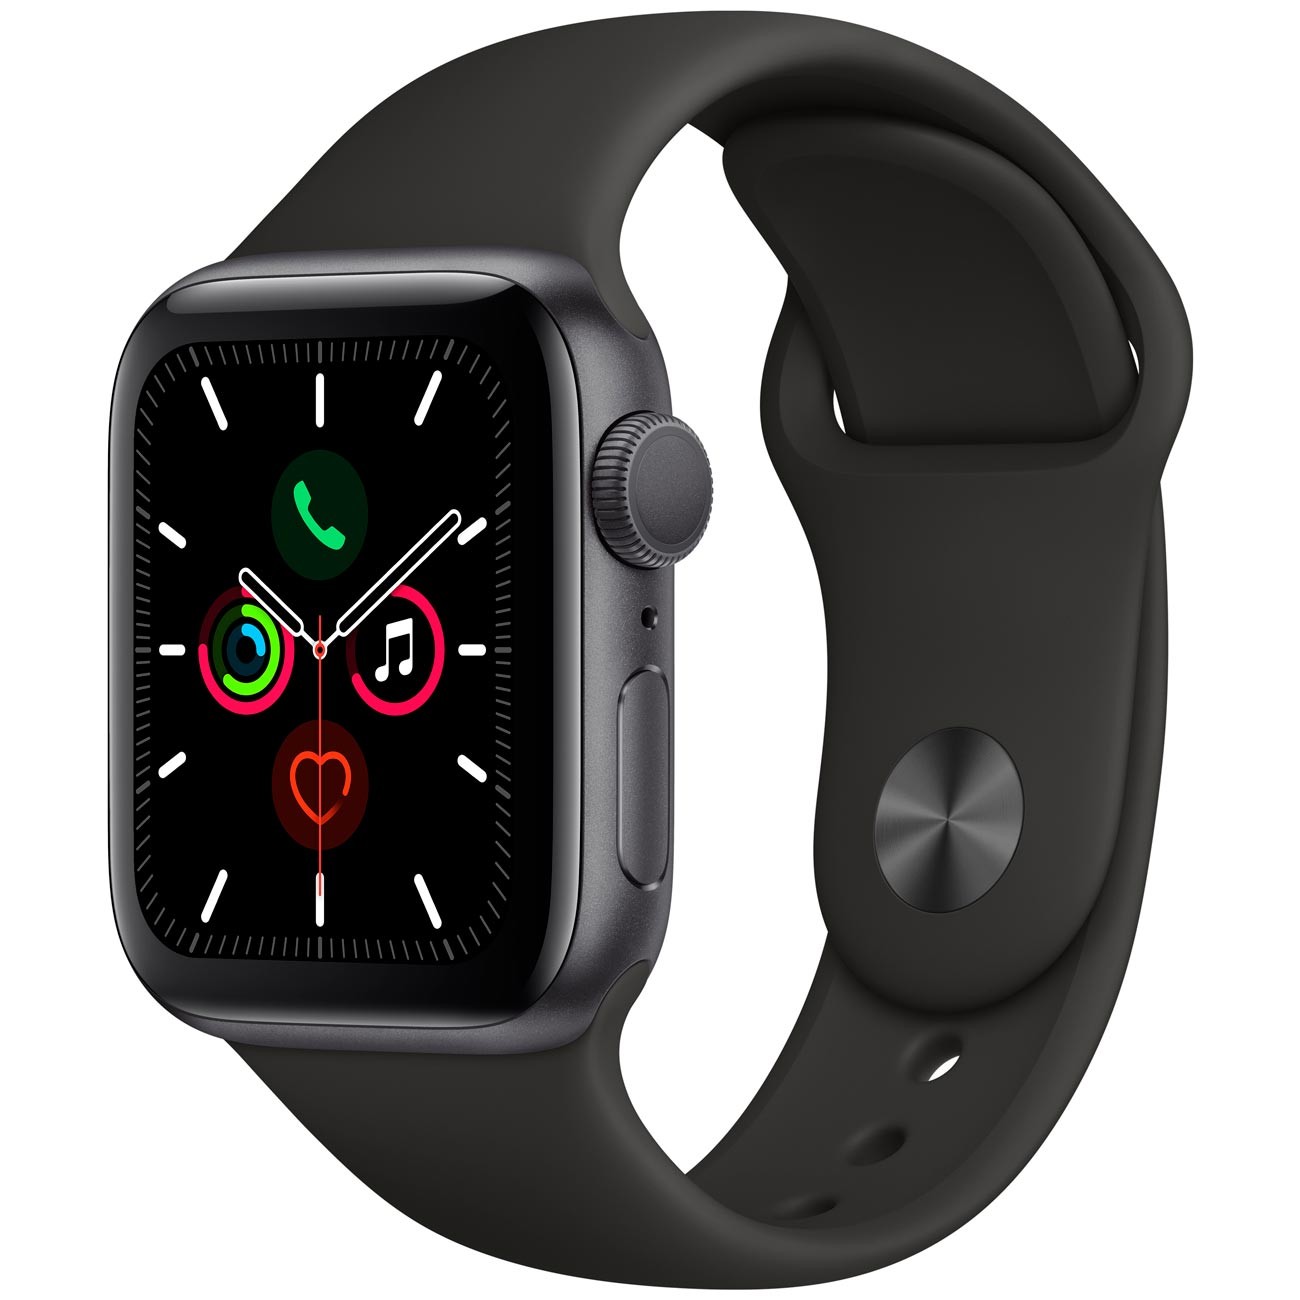 Смарт-часы Apple Watch S5 40mm Space Grey Sport Band (MWV82RU/A)